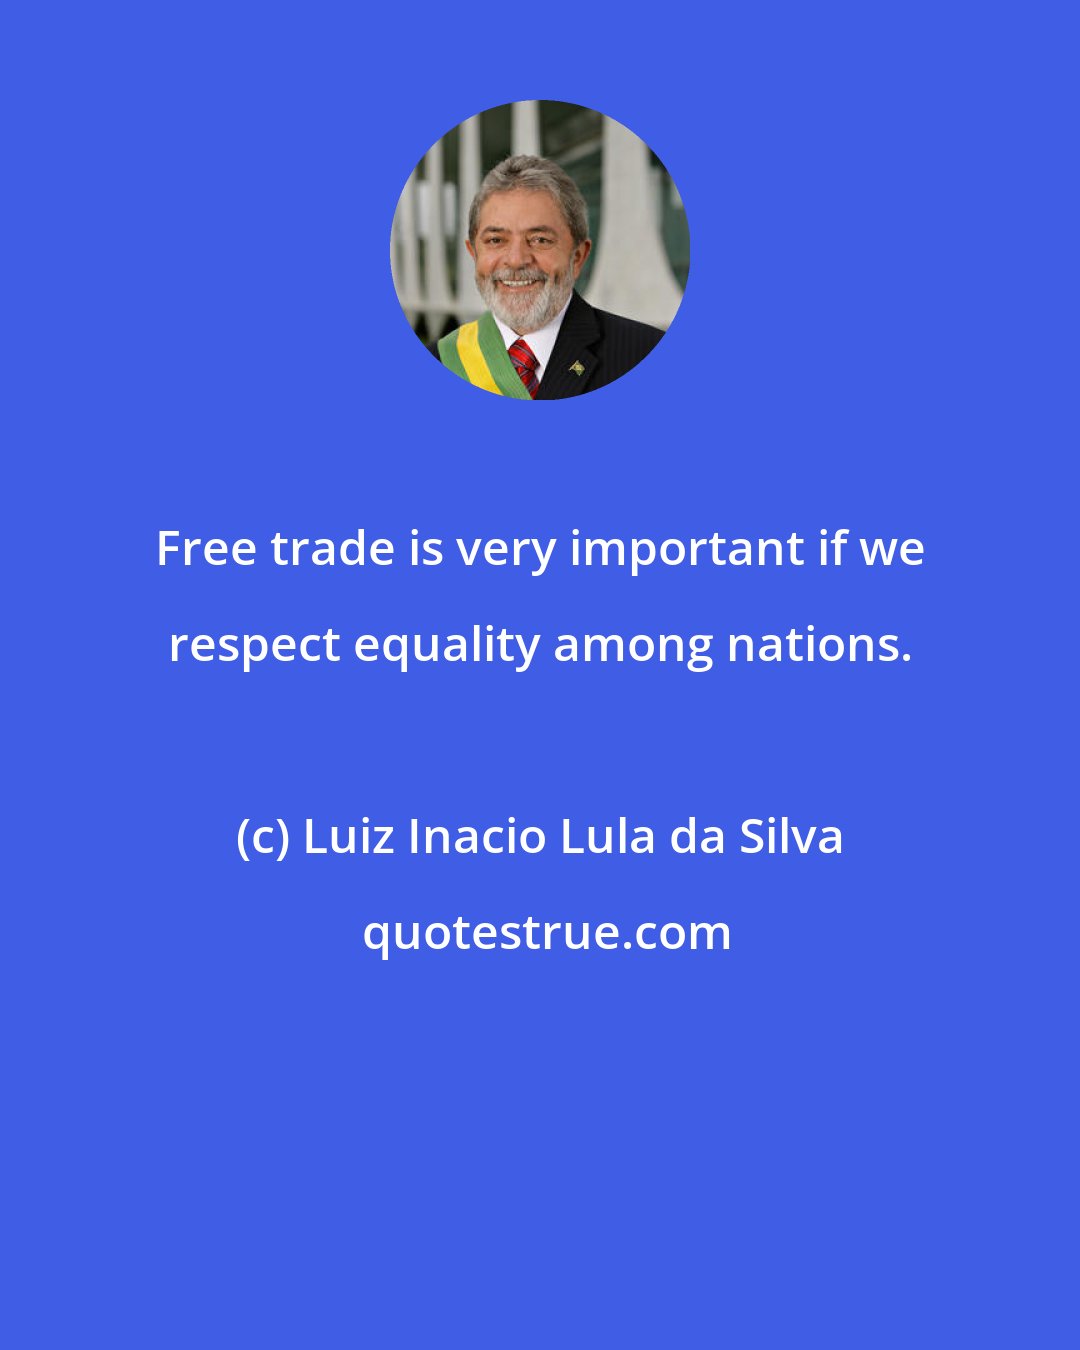 Luiz Inacio Lula da Silva: Free trade is very important if we respect equality among nations.